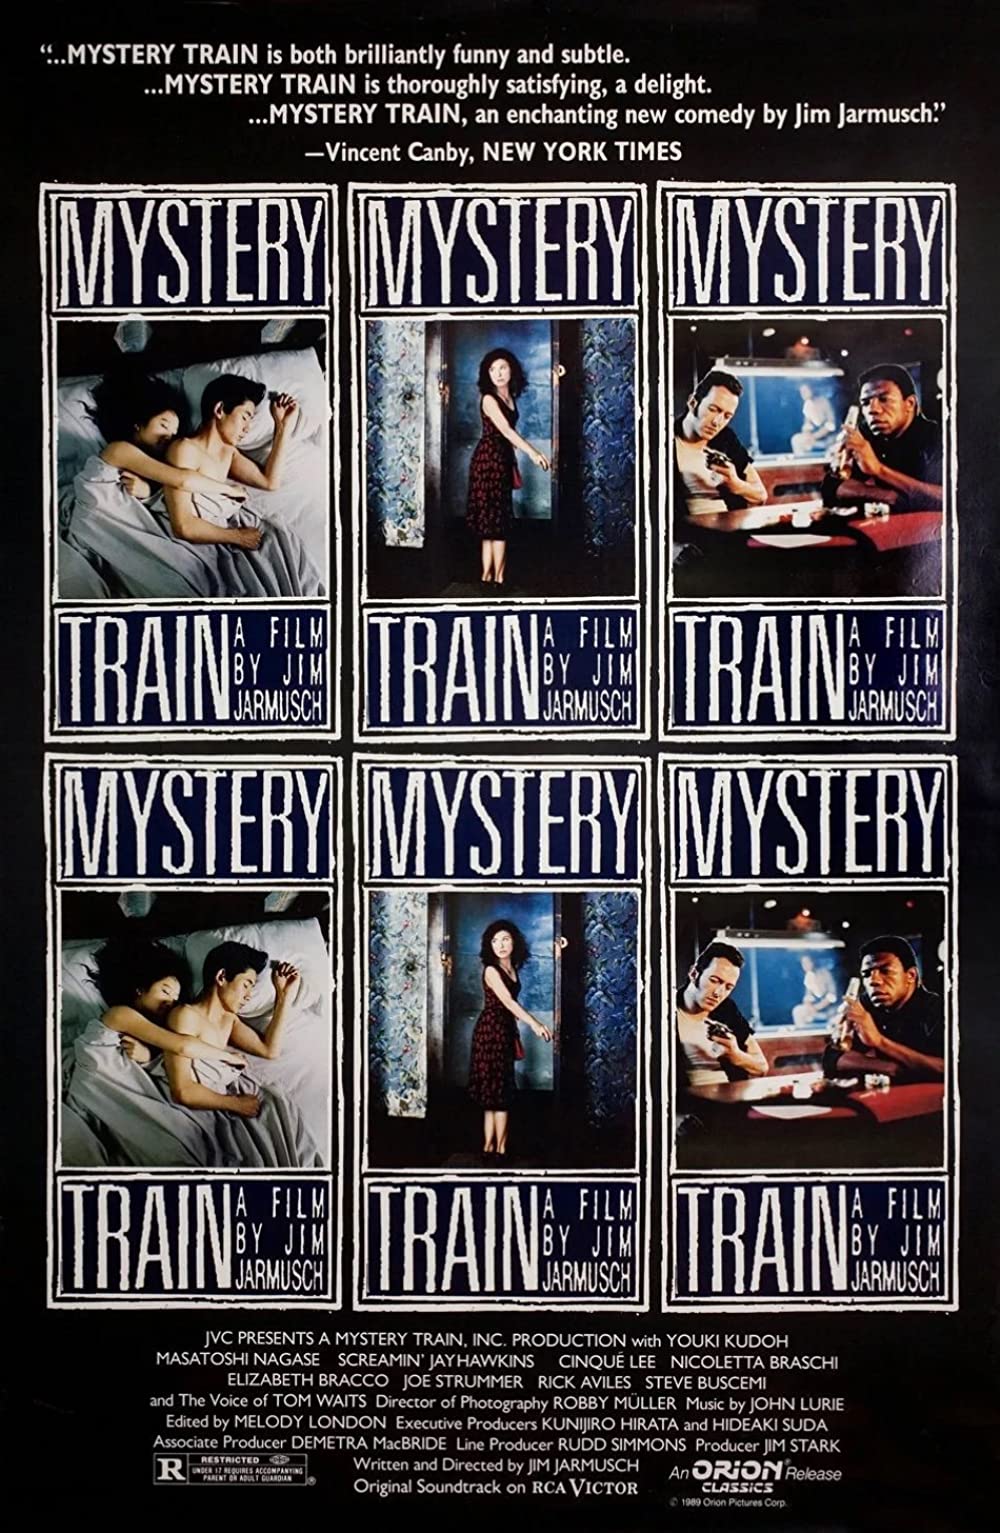 Filmbeschreibung zu Mystery Train